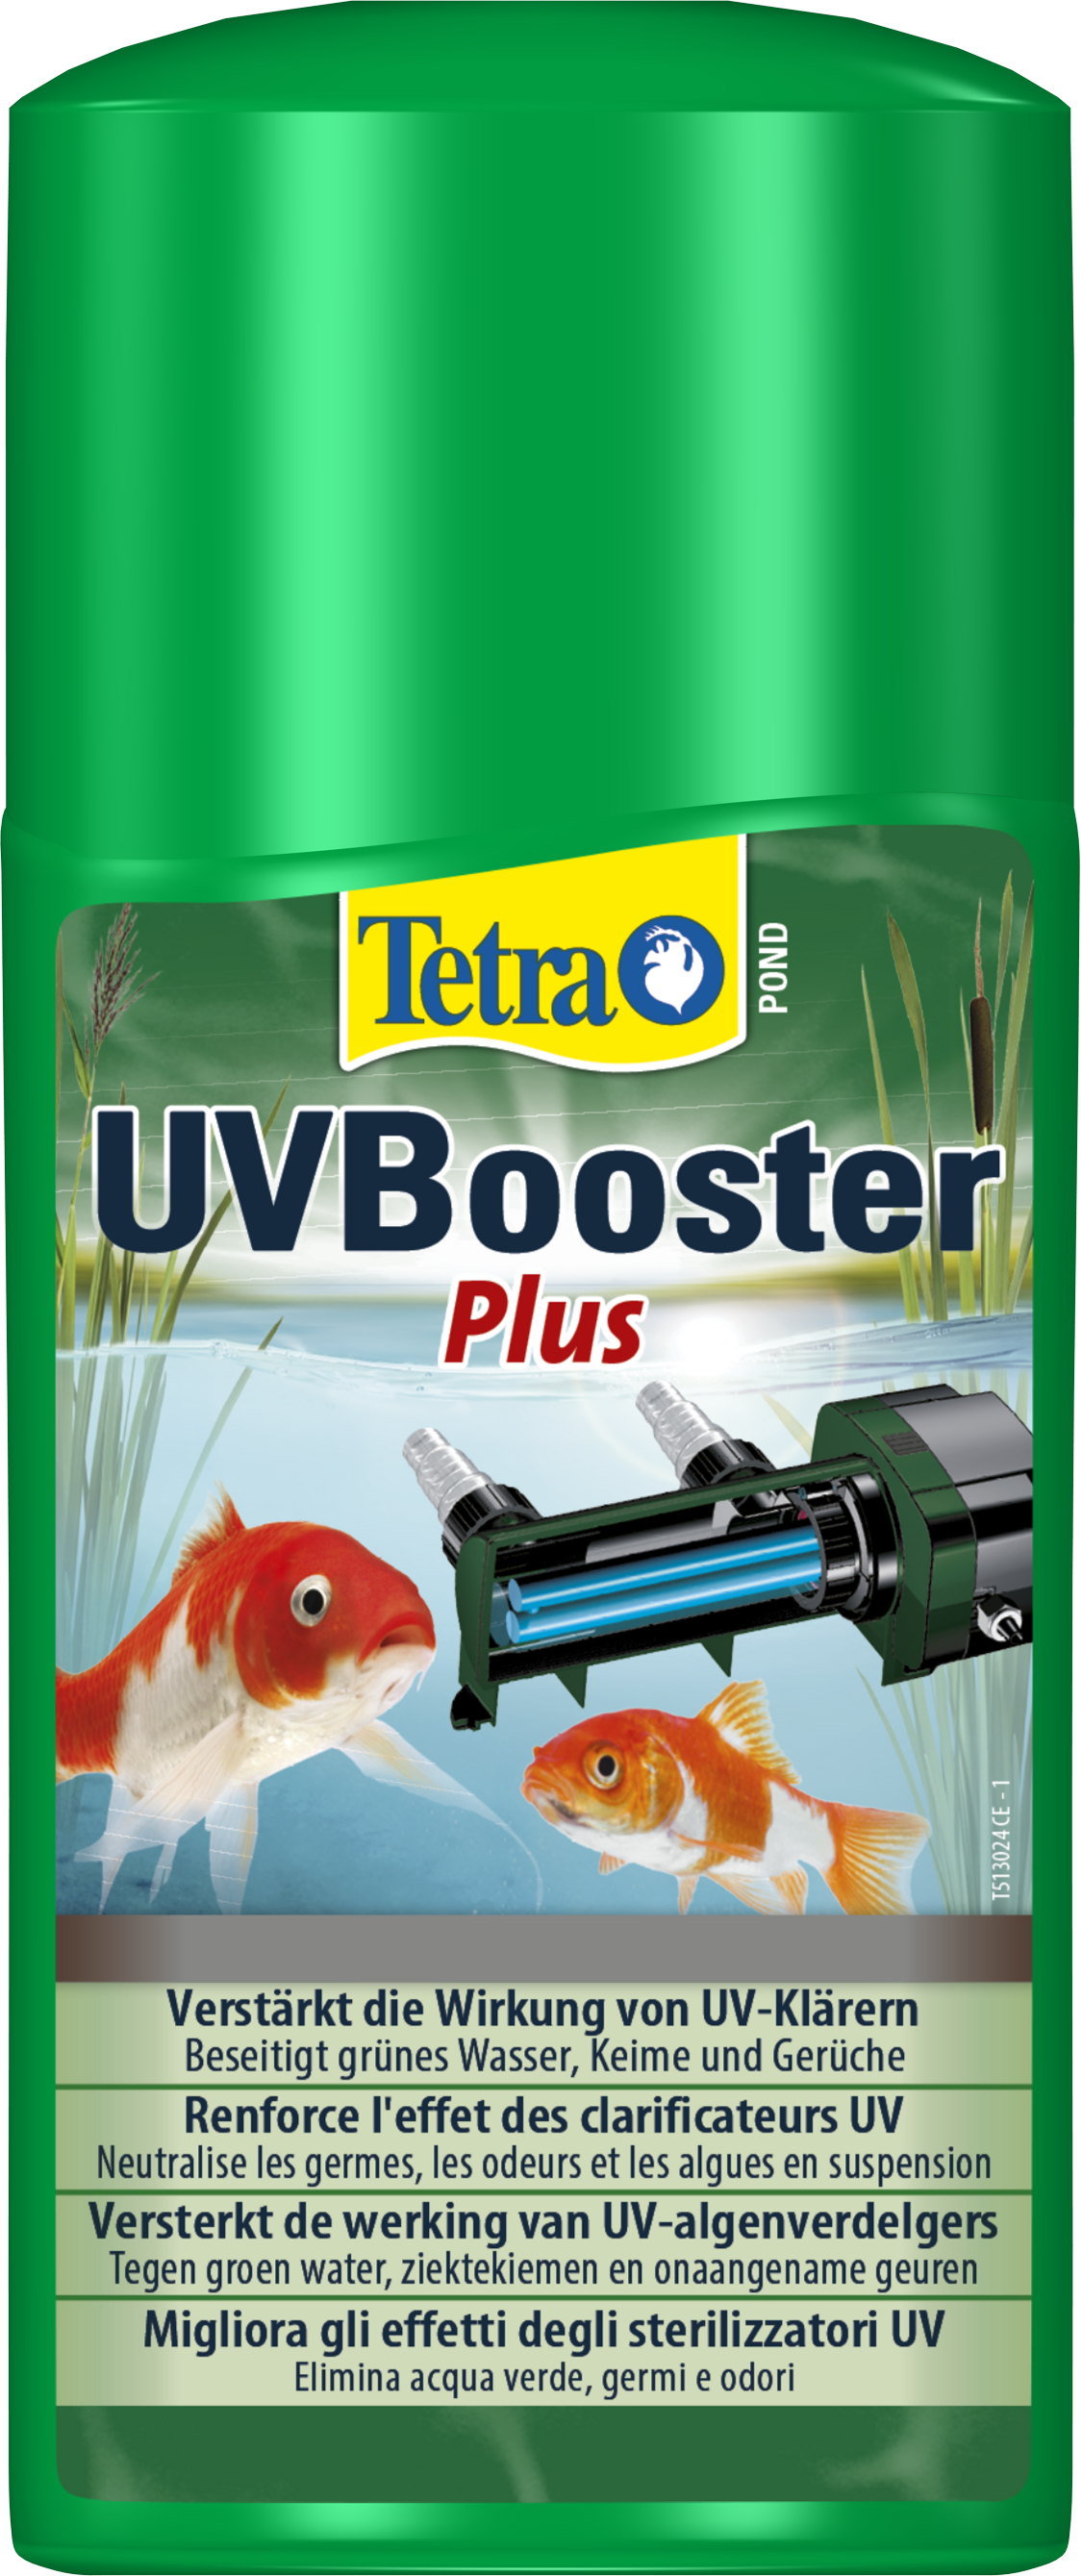 Tetra Pond UVBooster Plus*: Tetra